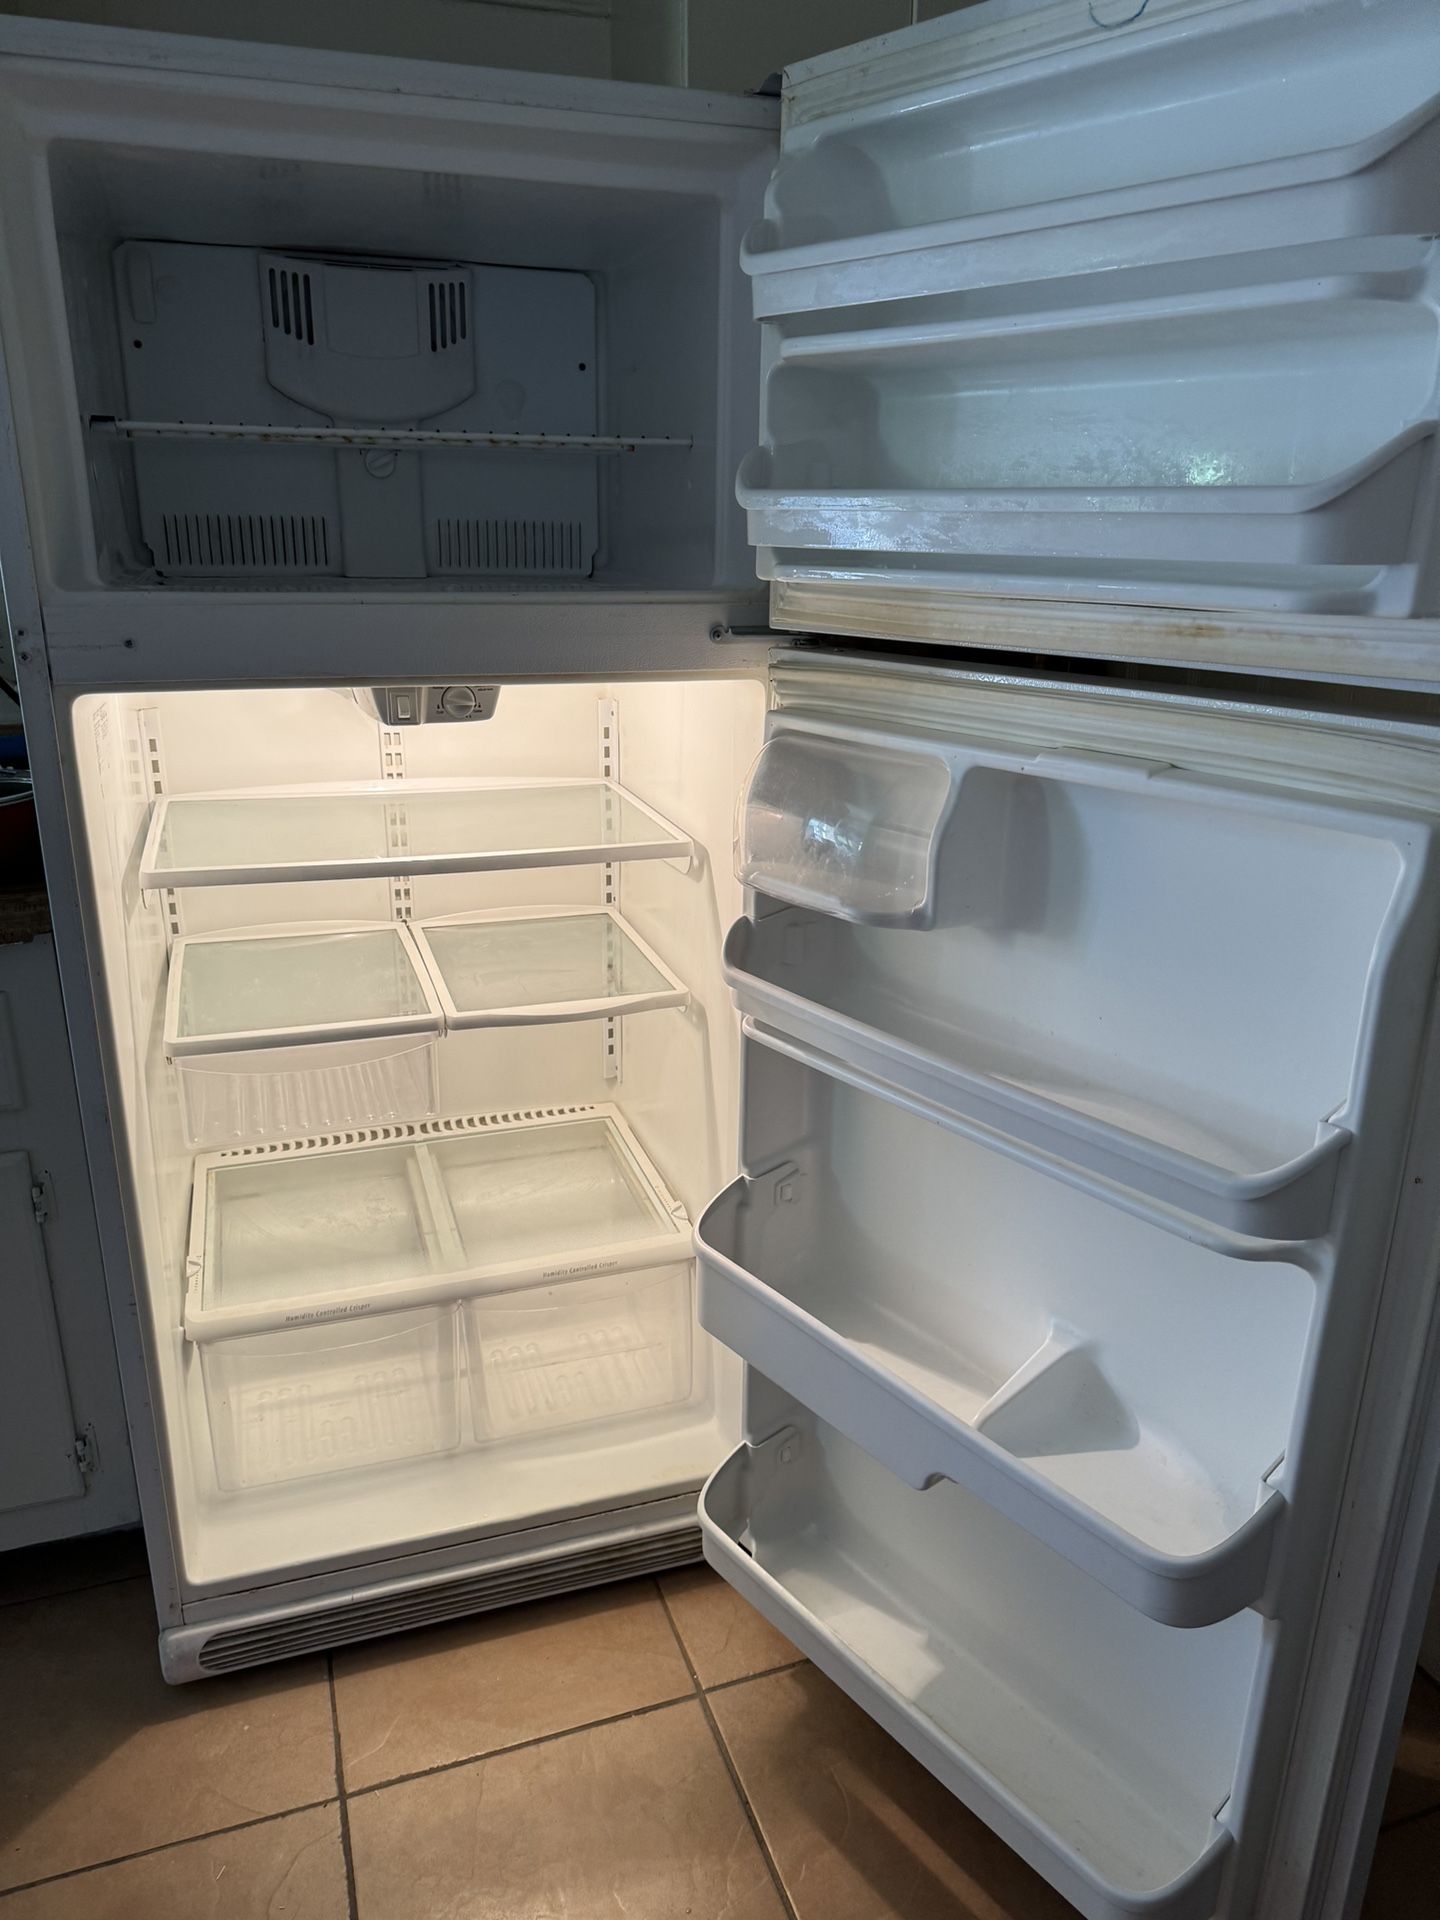 18.2 cu. ft. top freezer refrigerator